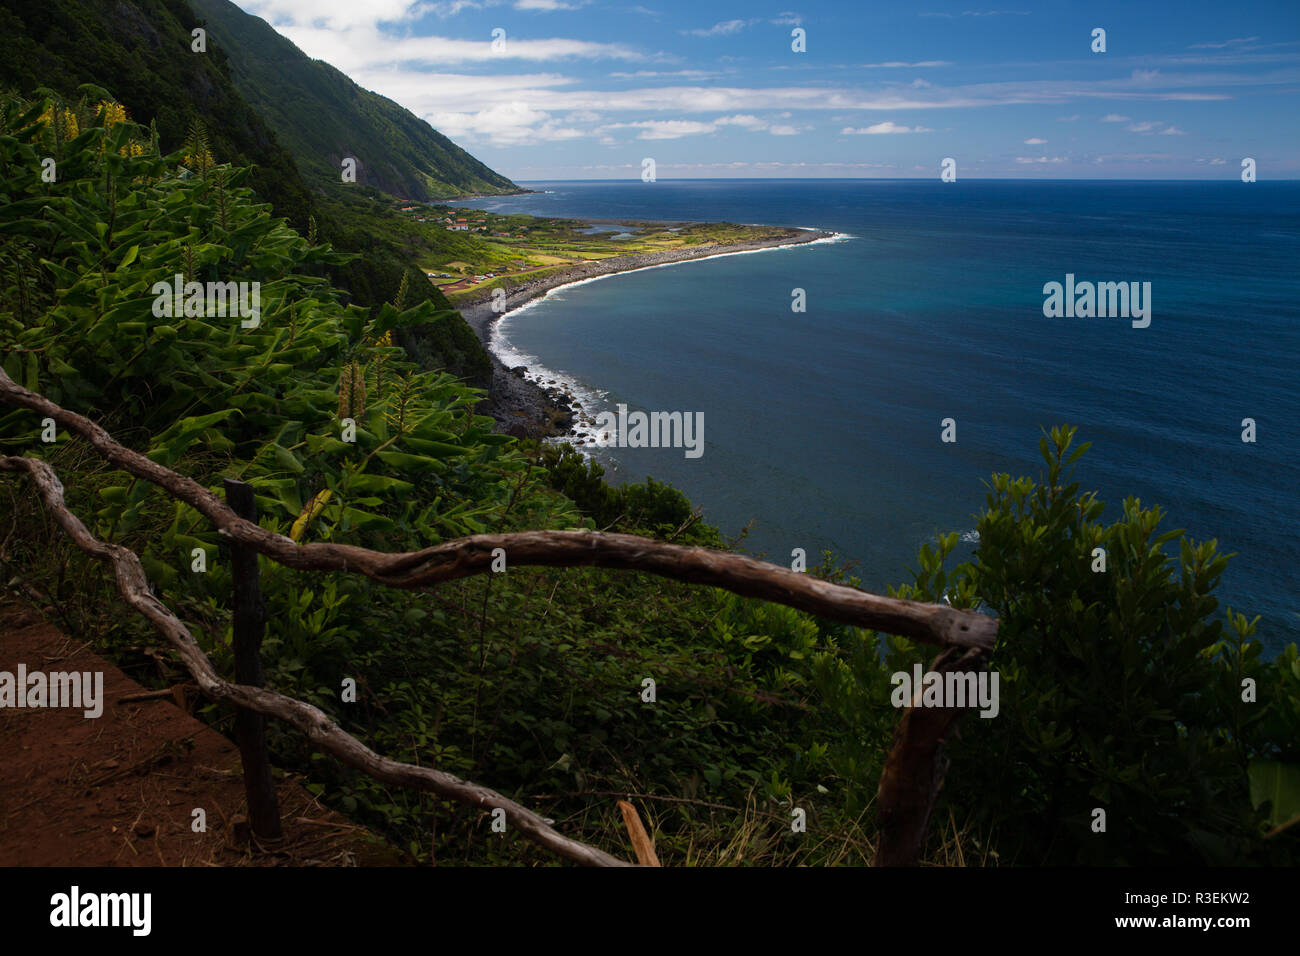 Faja dos cubres fotografías e imágenes de alta resolución - Alamy